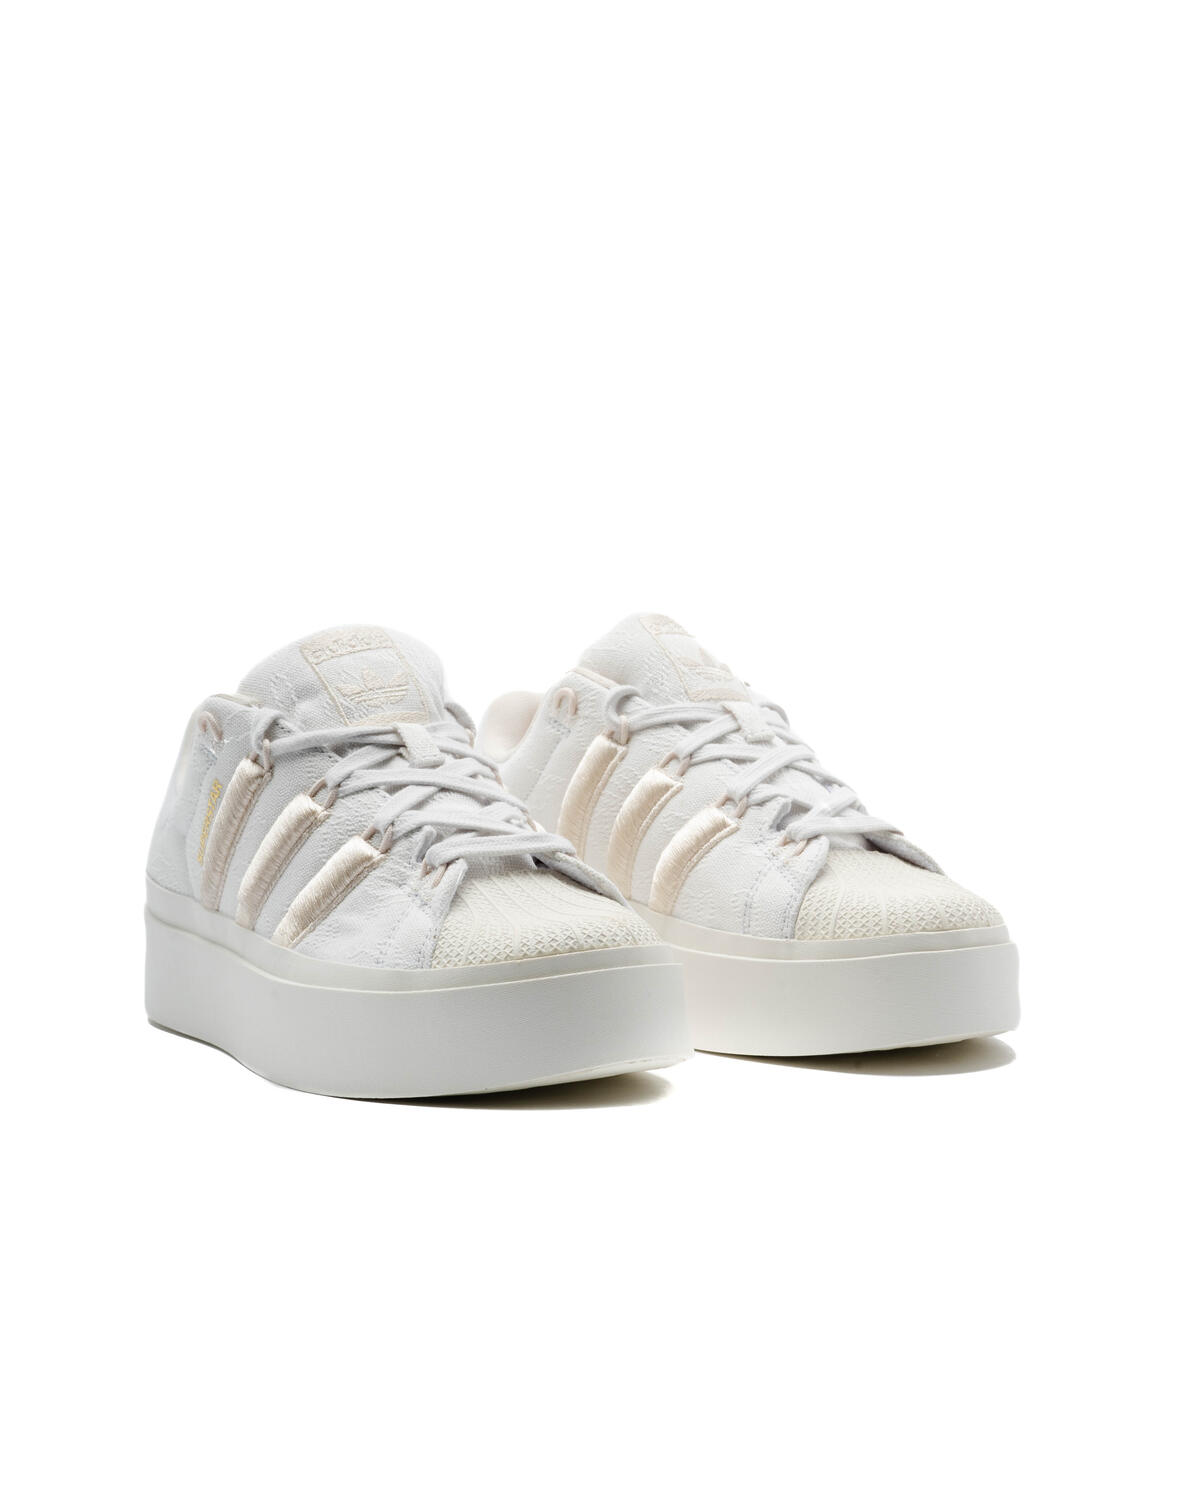 adidas Originals Superstar Bonega platform sneakers in white and